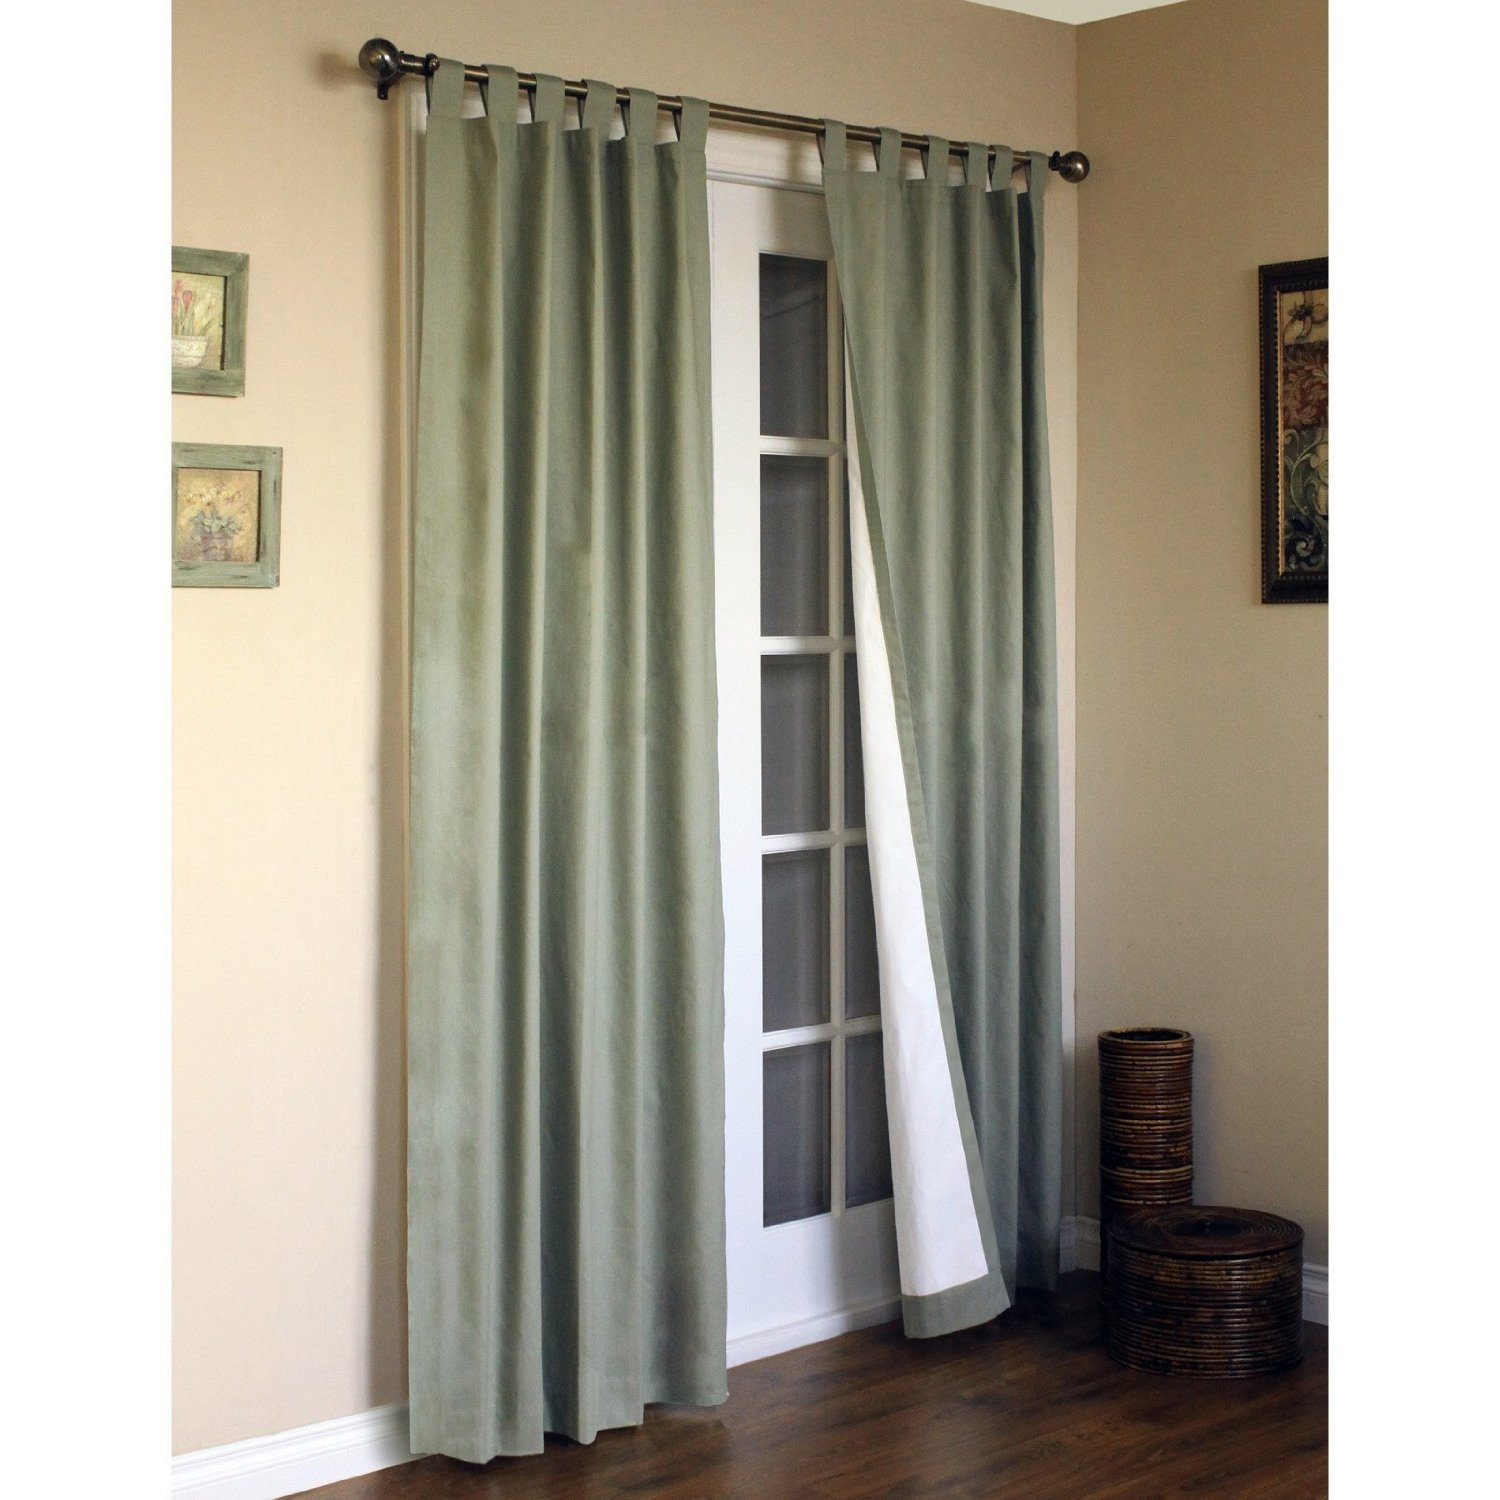 Best ideas about Patio Door Curtain Rods
. Save or Pin Fabulous Fantastic Curtain Patio Door Patio Door Curtain Now.